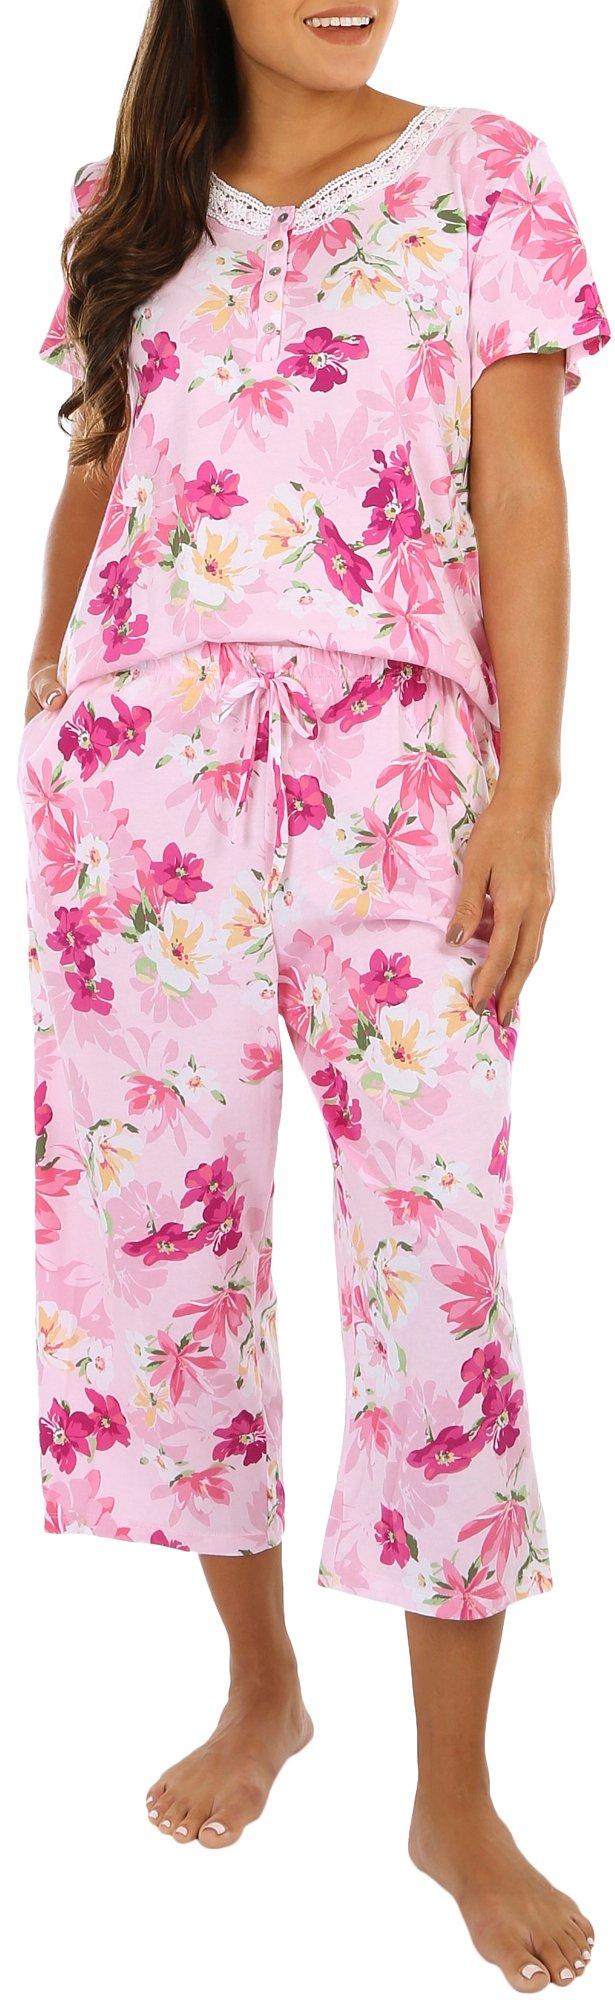 Aria Womens 2-Pc. Floral Short Sleeve Top & Capris Sleep Set